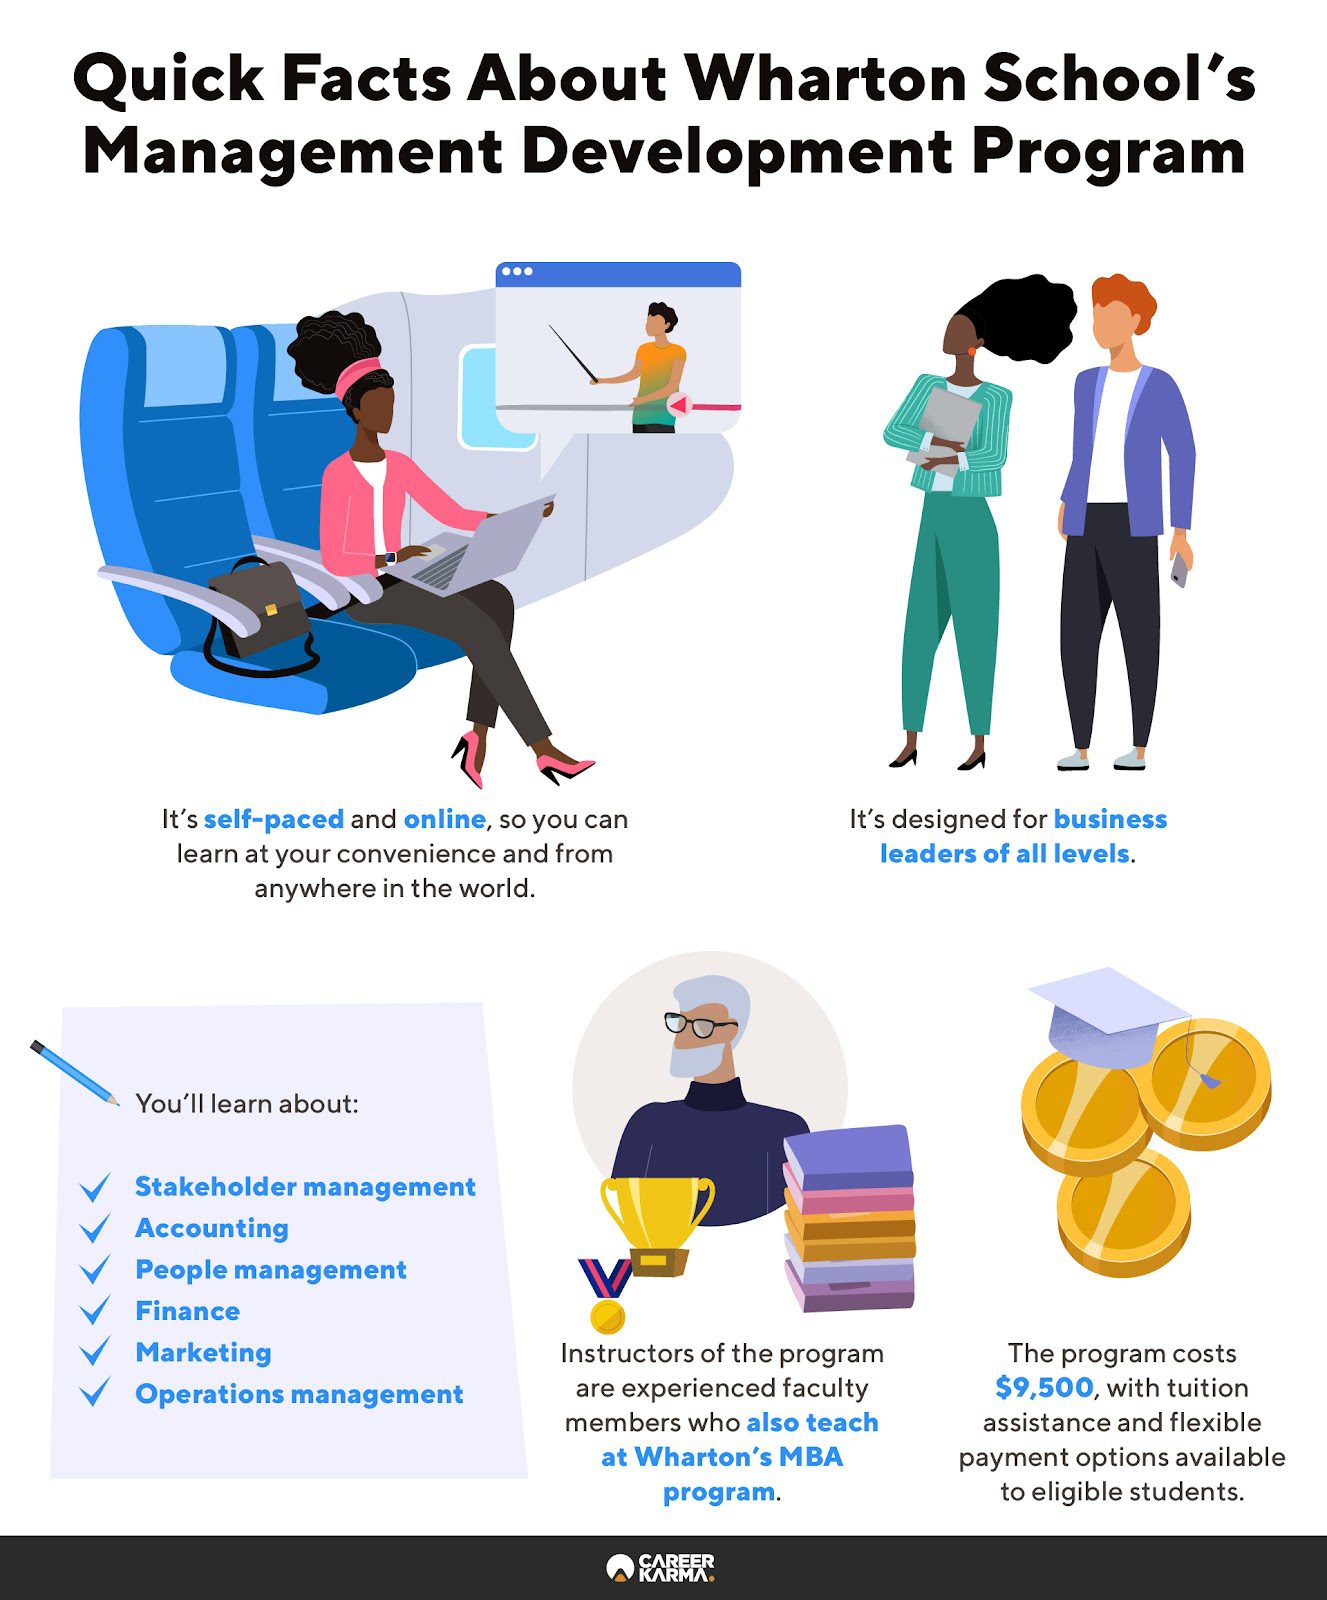 An infographic highlighting quick facts about Wharton School’s Management Development Program